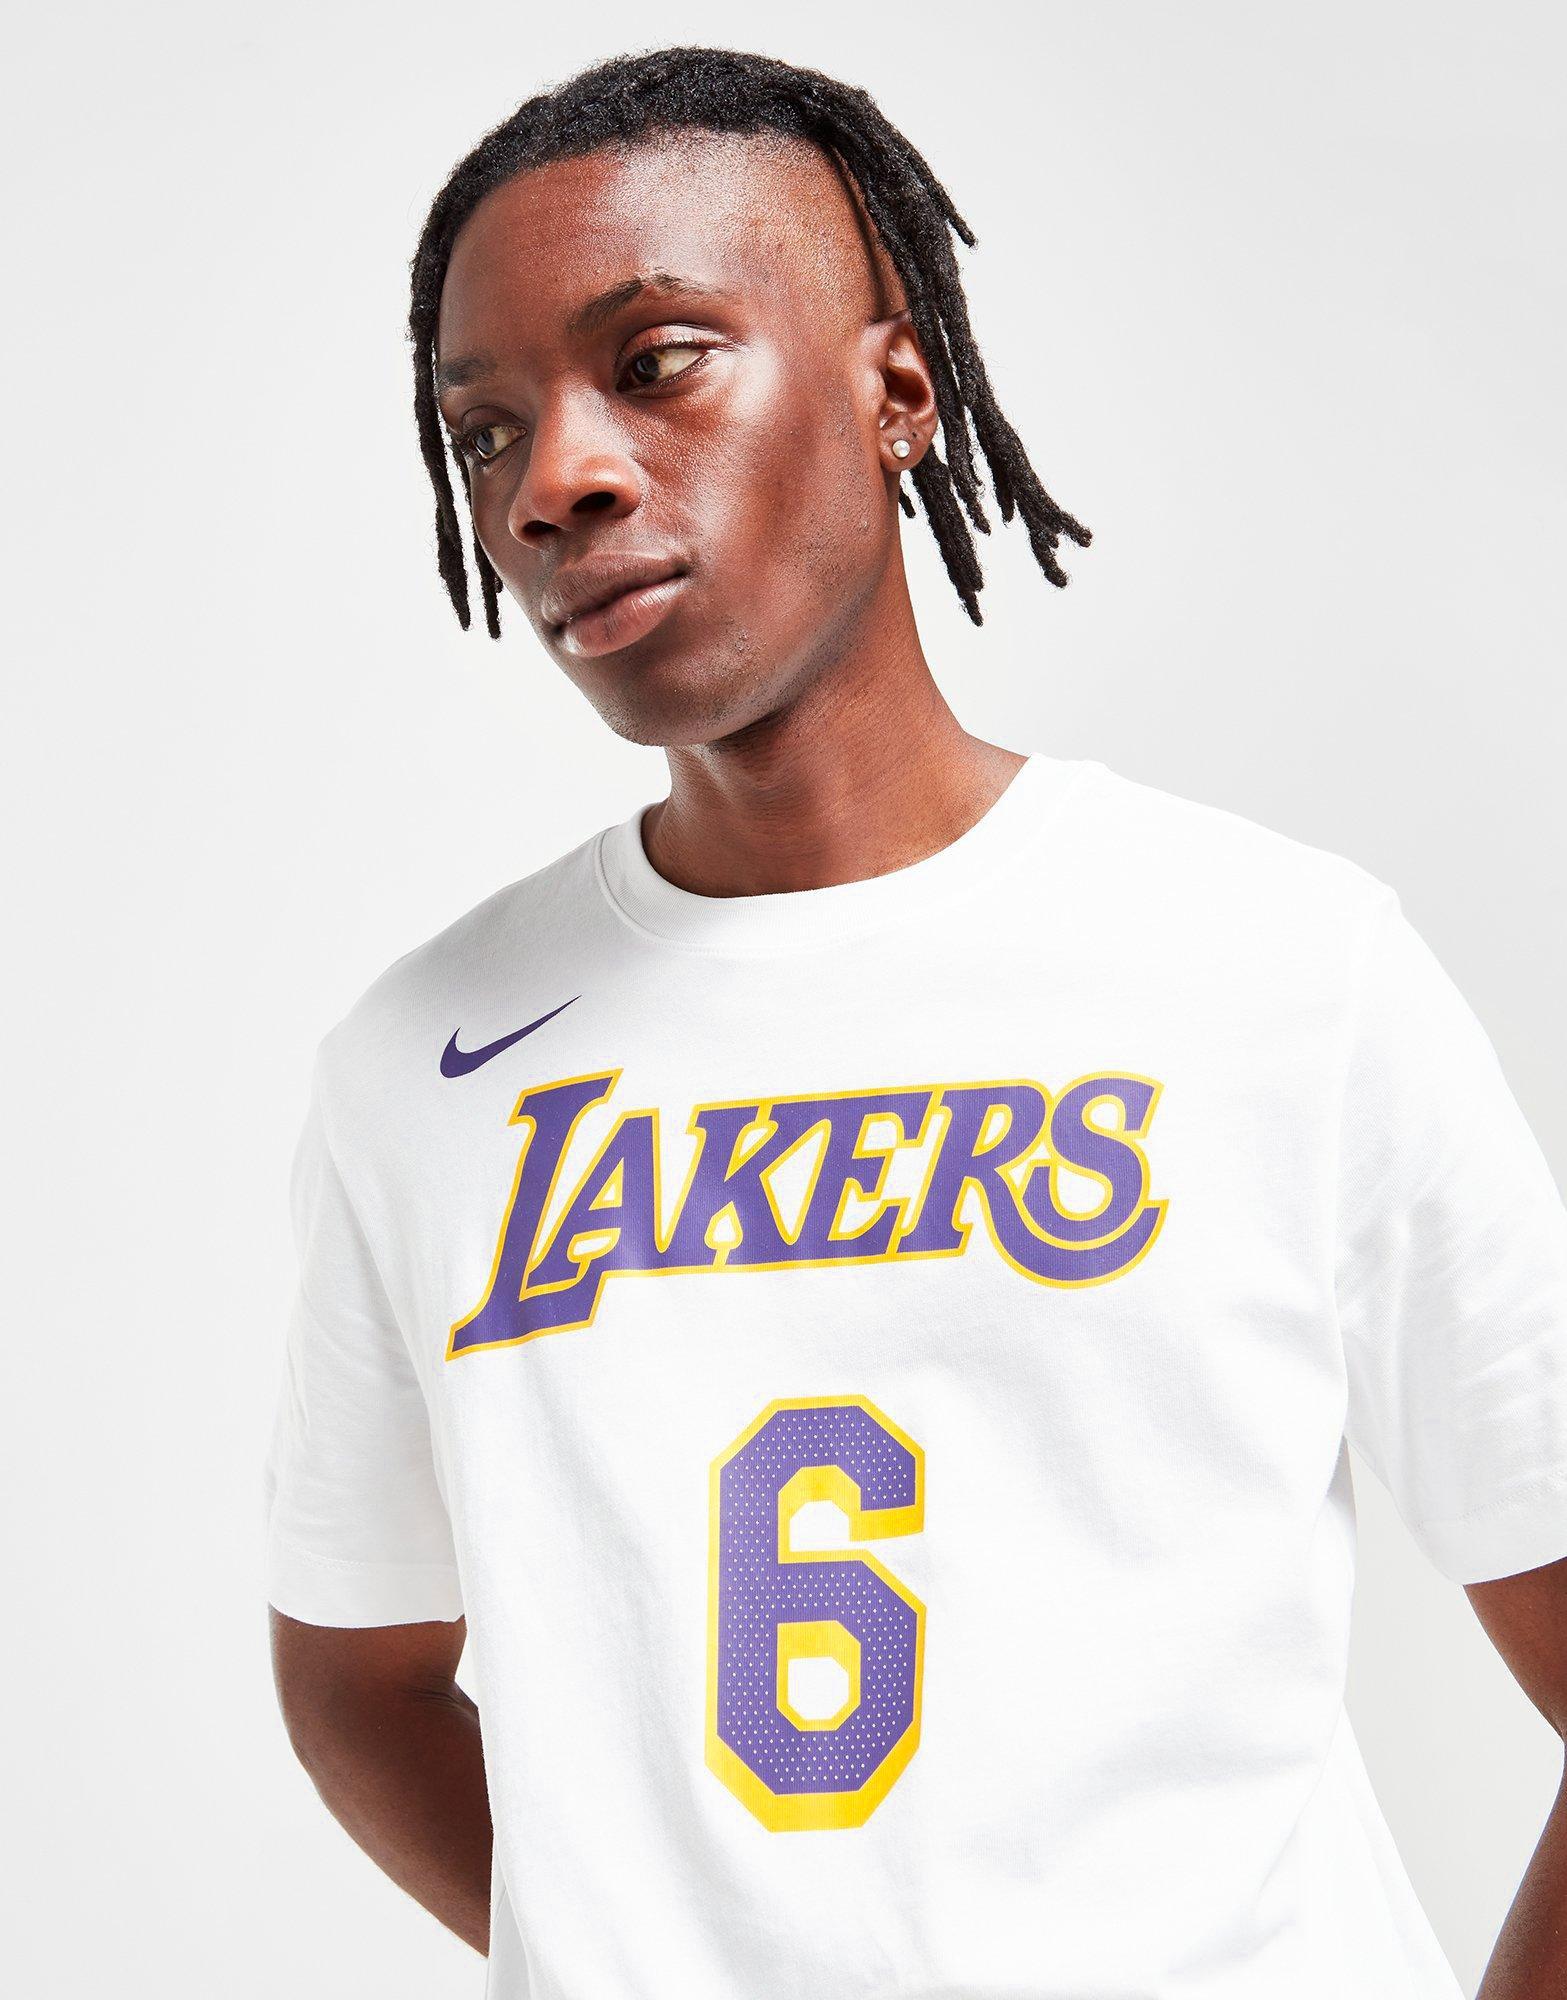 White Nike NBA Los Angeles Lakers James #6 T-Shirt